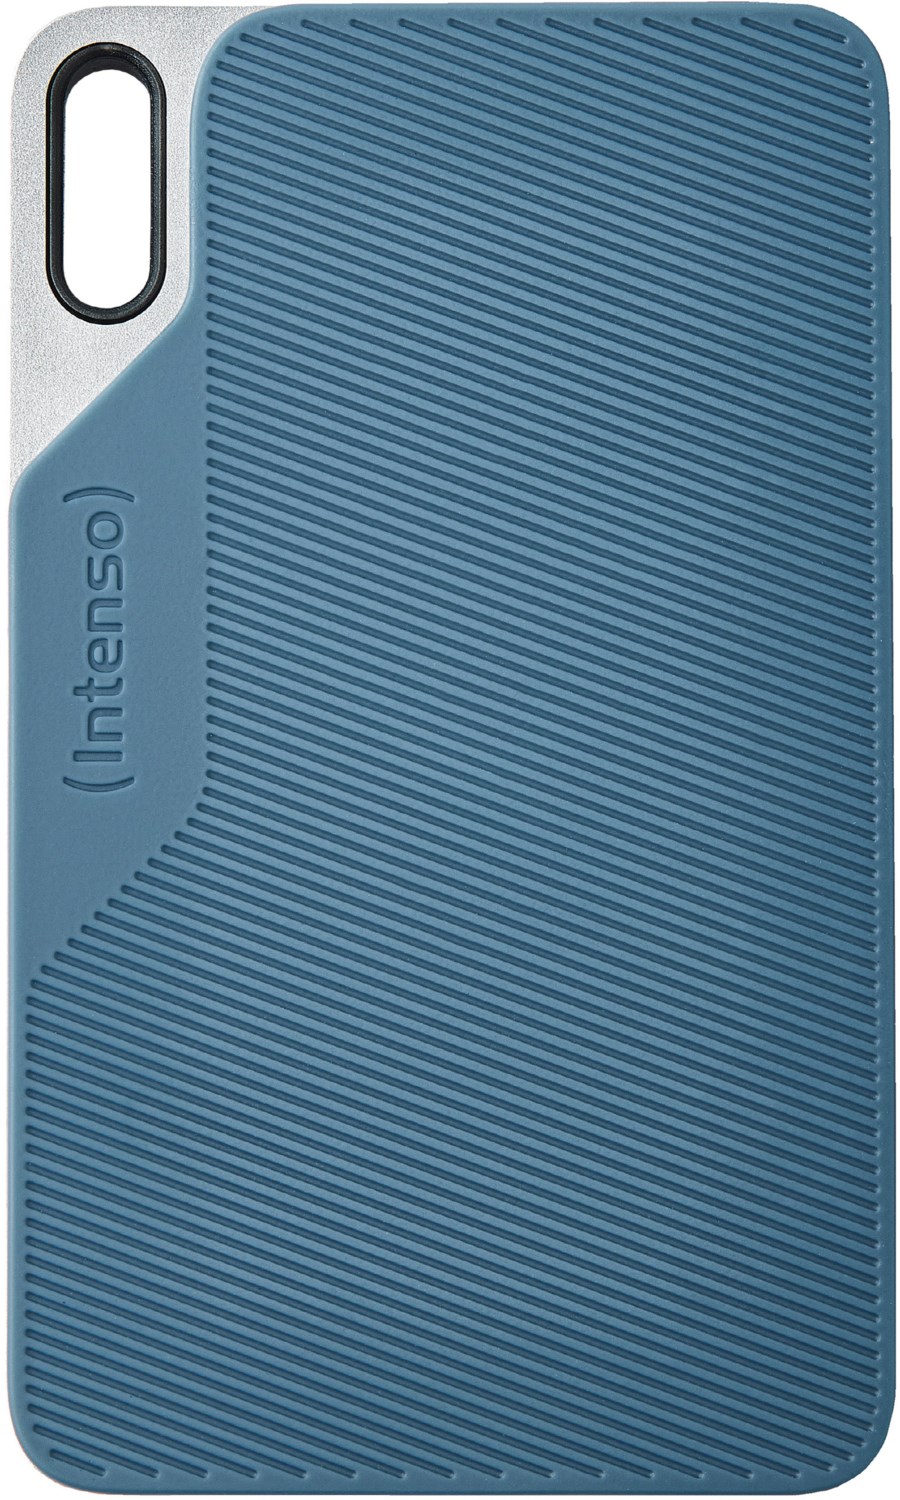 TX100 USB 3.2 Gen 1 (1TB) Externe SSD grau-blau von Intenso